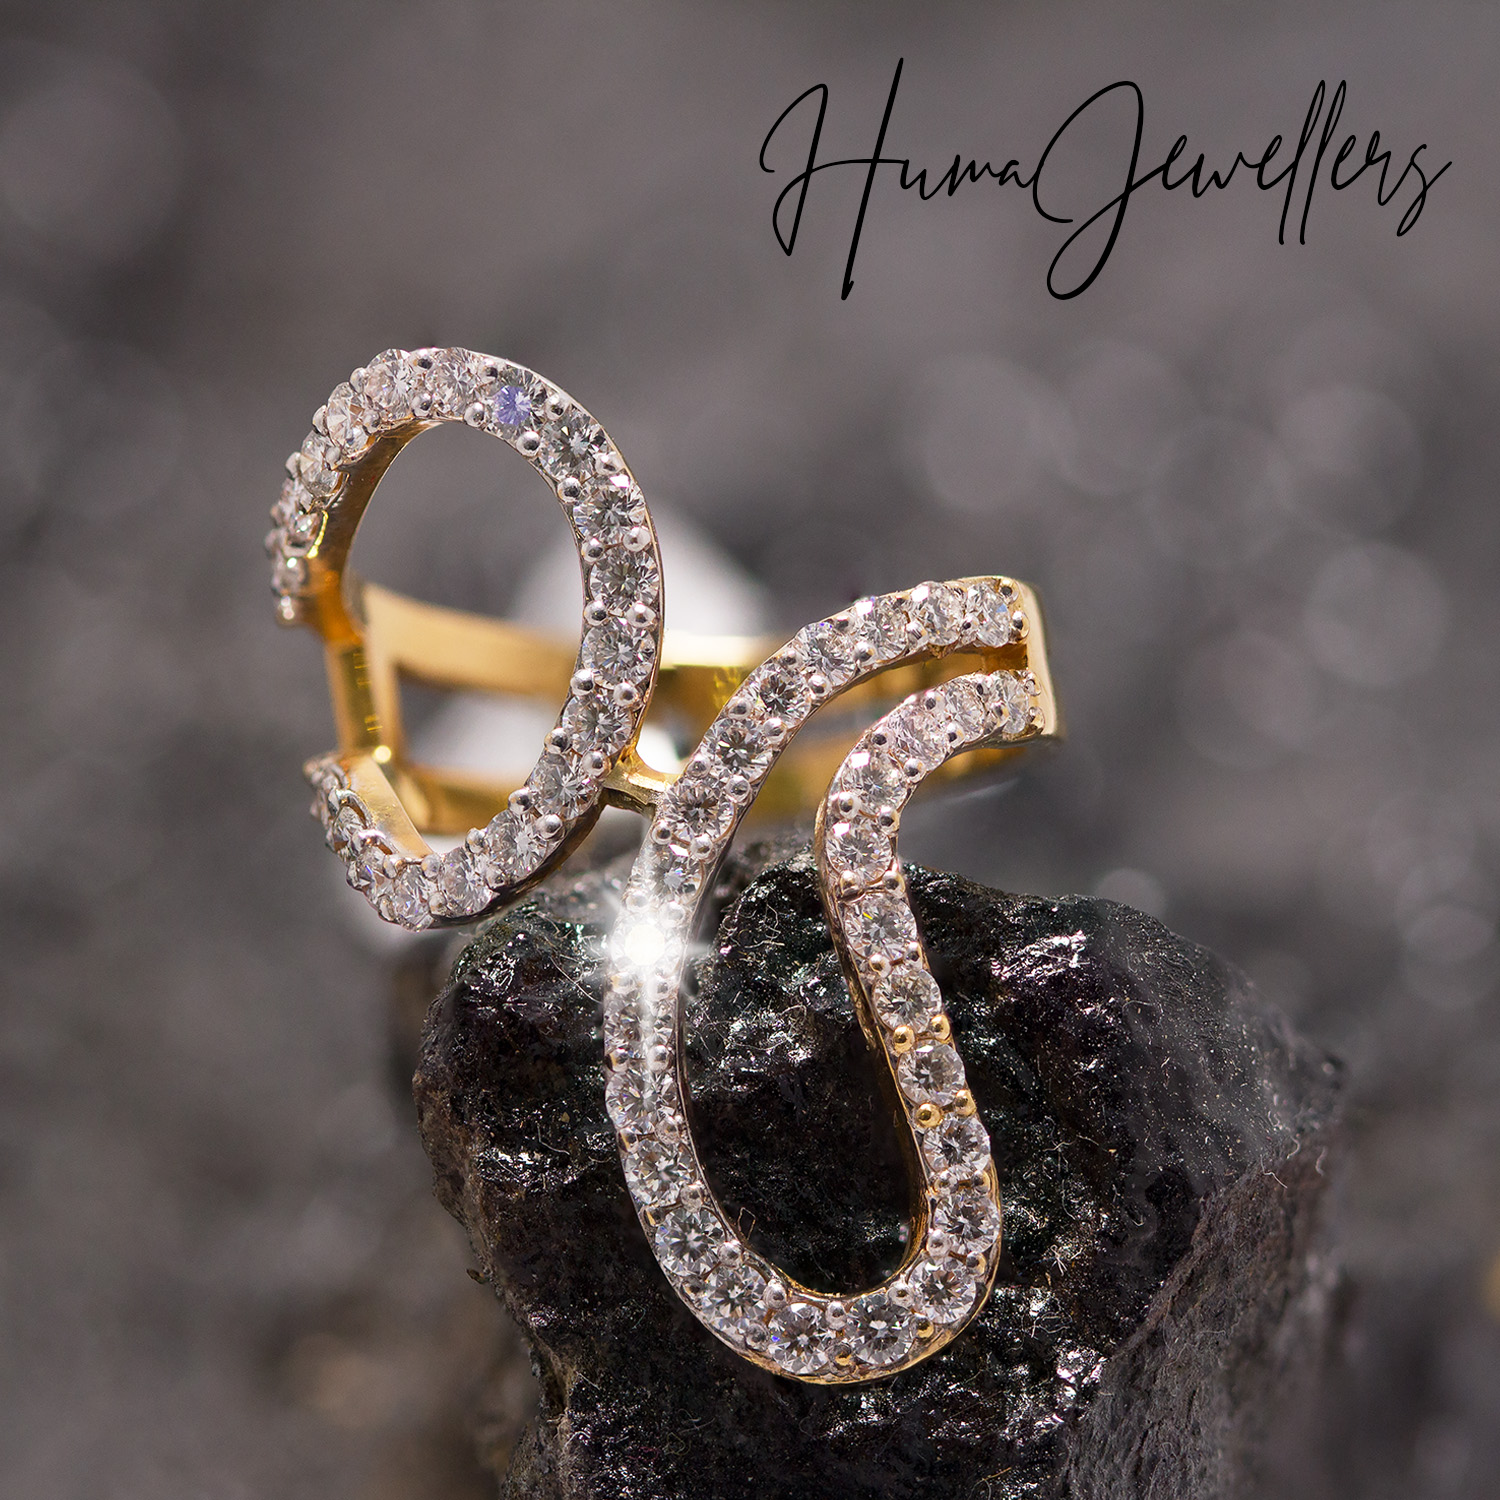 MODERN DIAMOND RING DESIGN IN 21 KARAT GOLD HUMA JEWELLERS